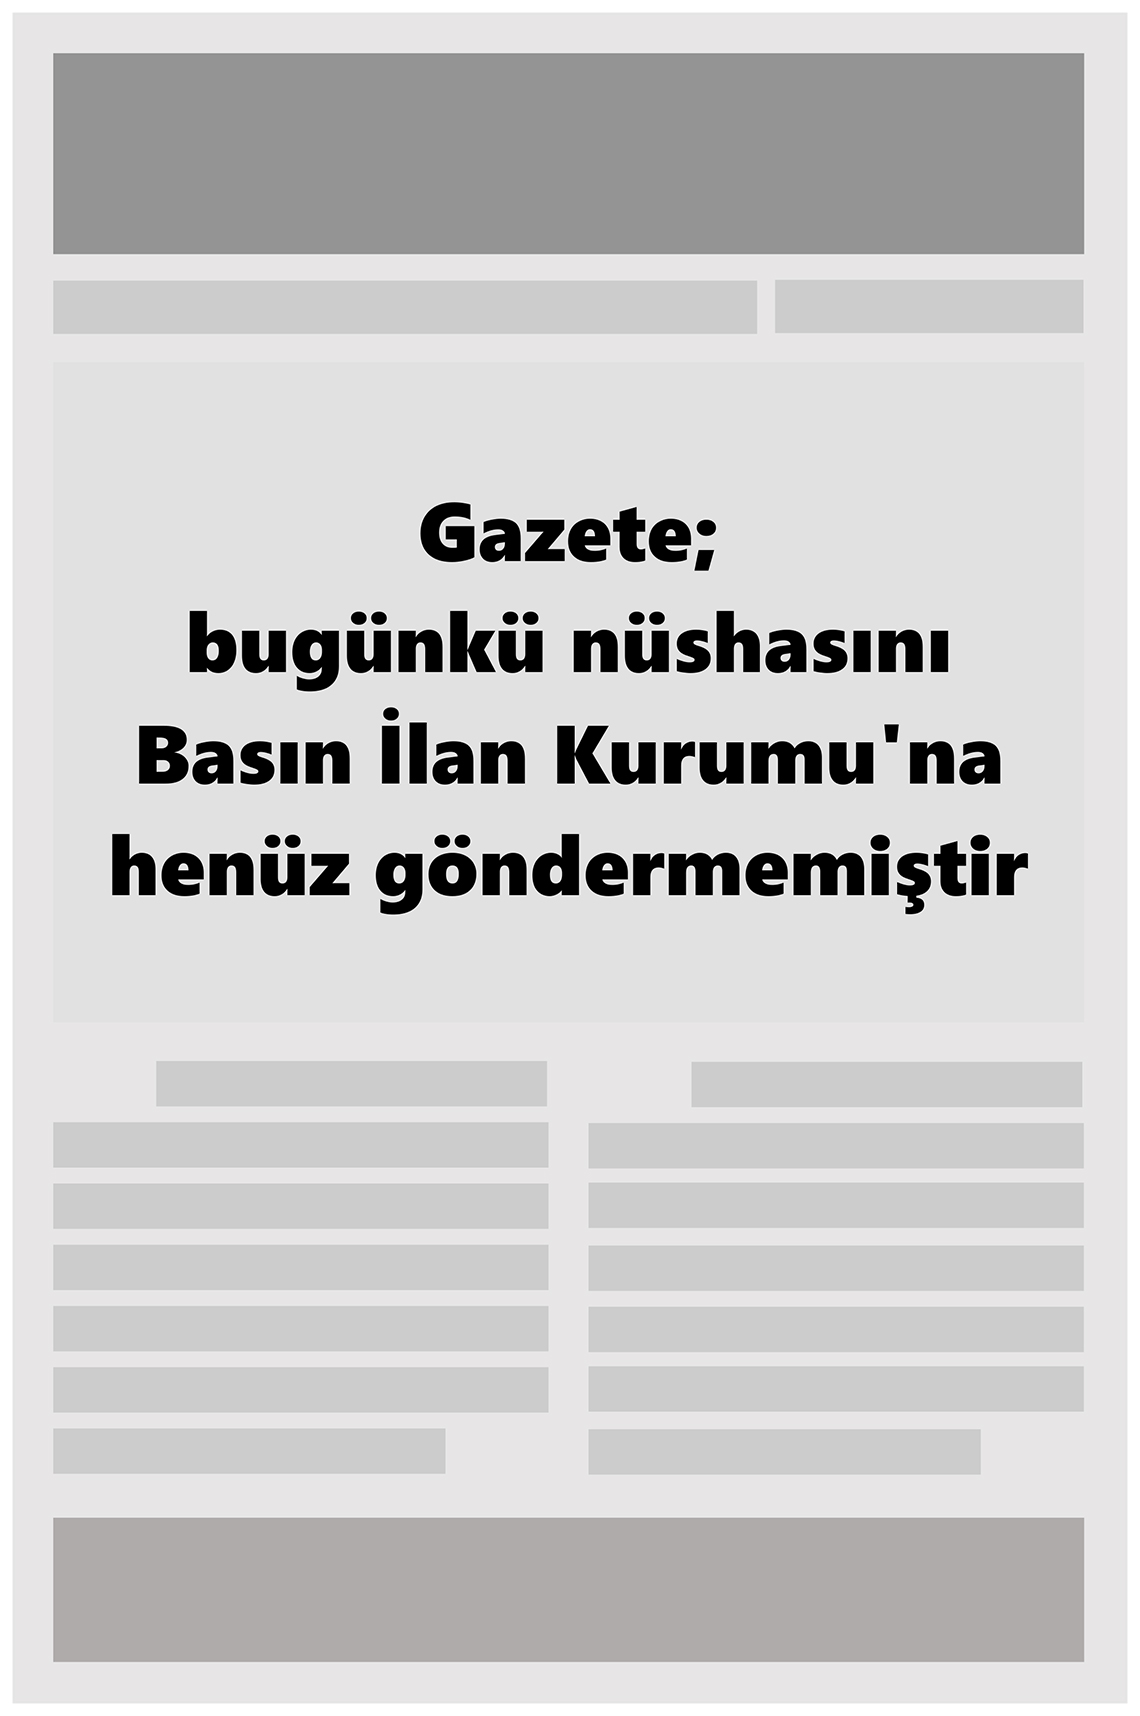 15 Ağustos 2022 Mut'tan Haber Gazete Manşeti